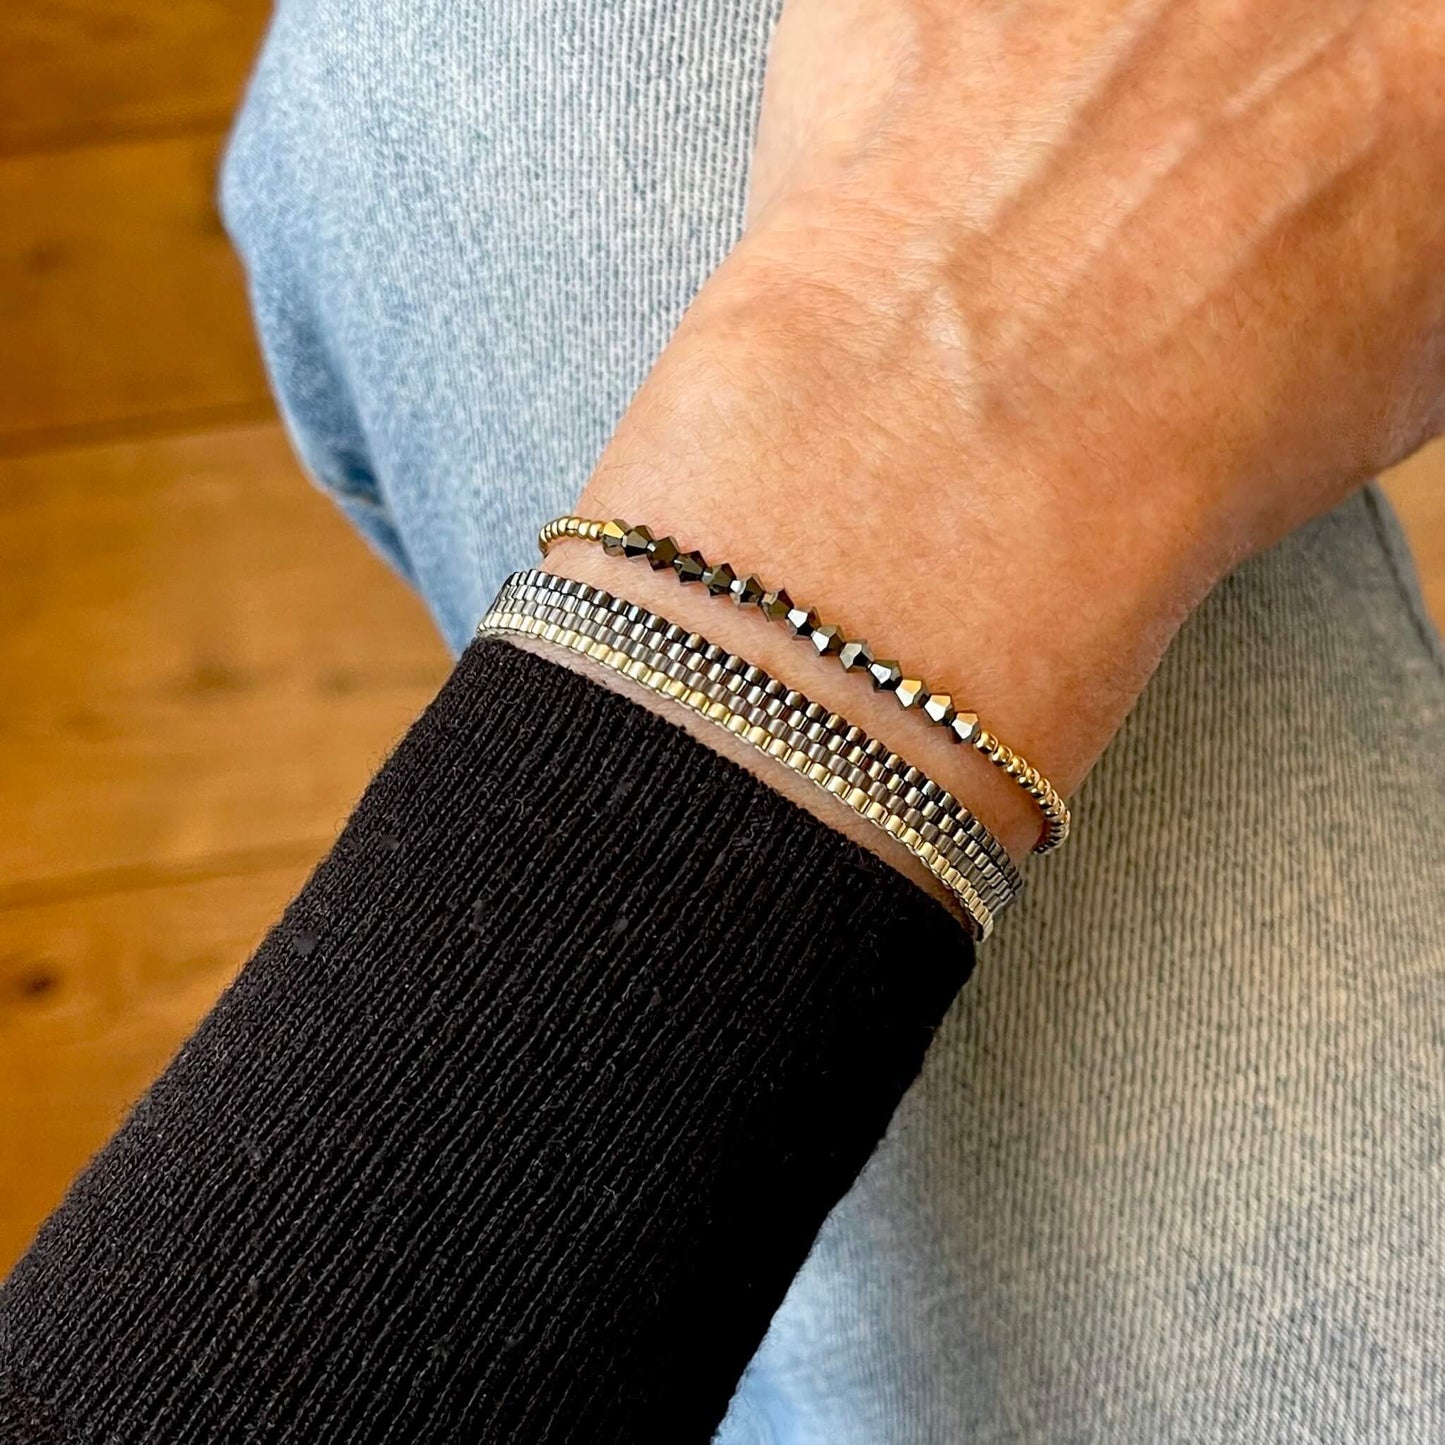 Metal bead bracelets | Black/gray/silver ombre stripes woven bracelet | Crystal hematite gold ball stretch bracelet.